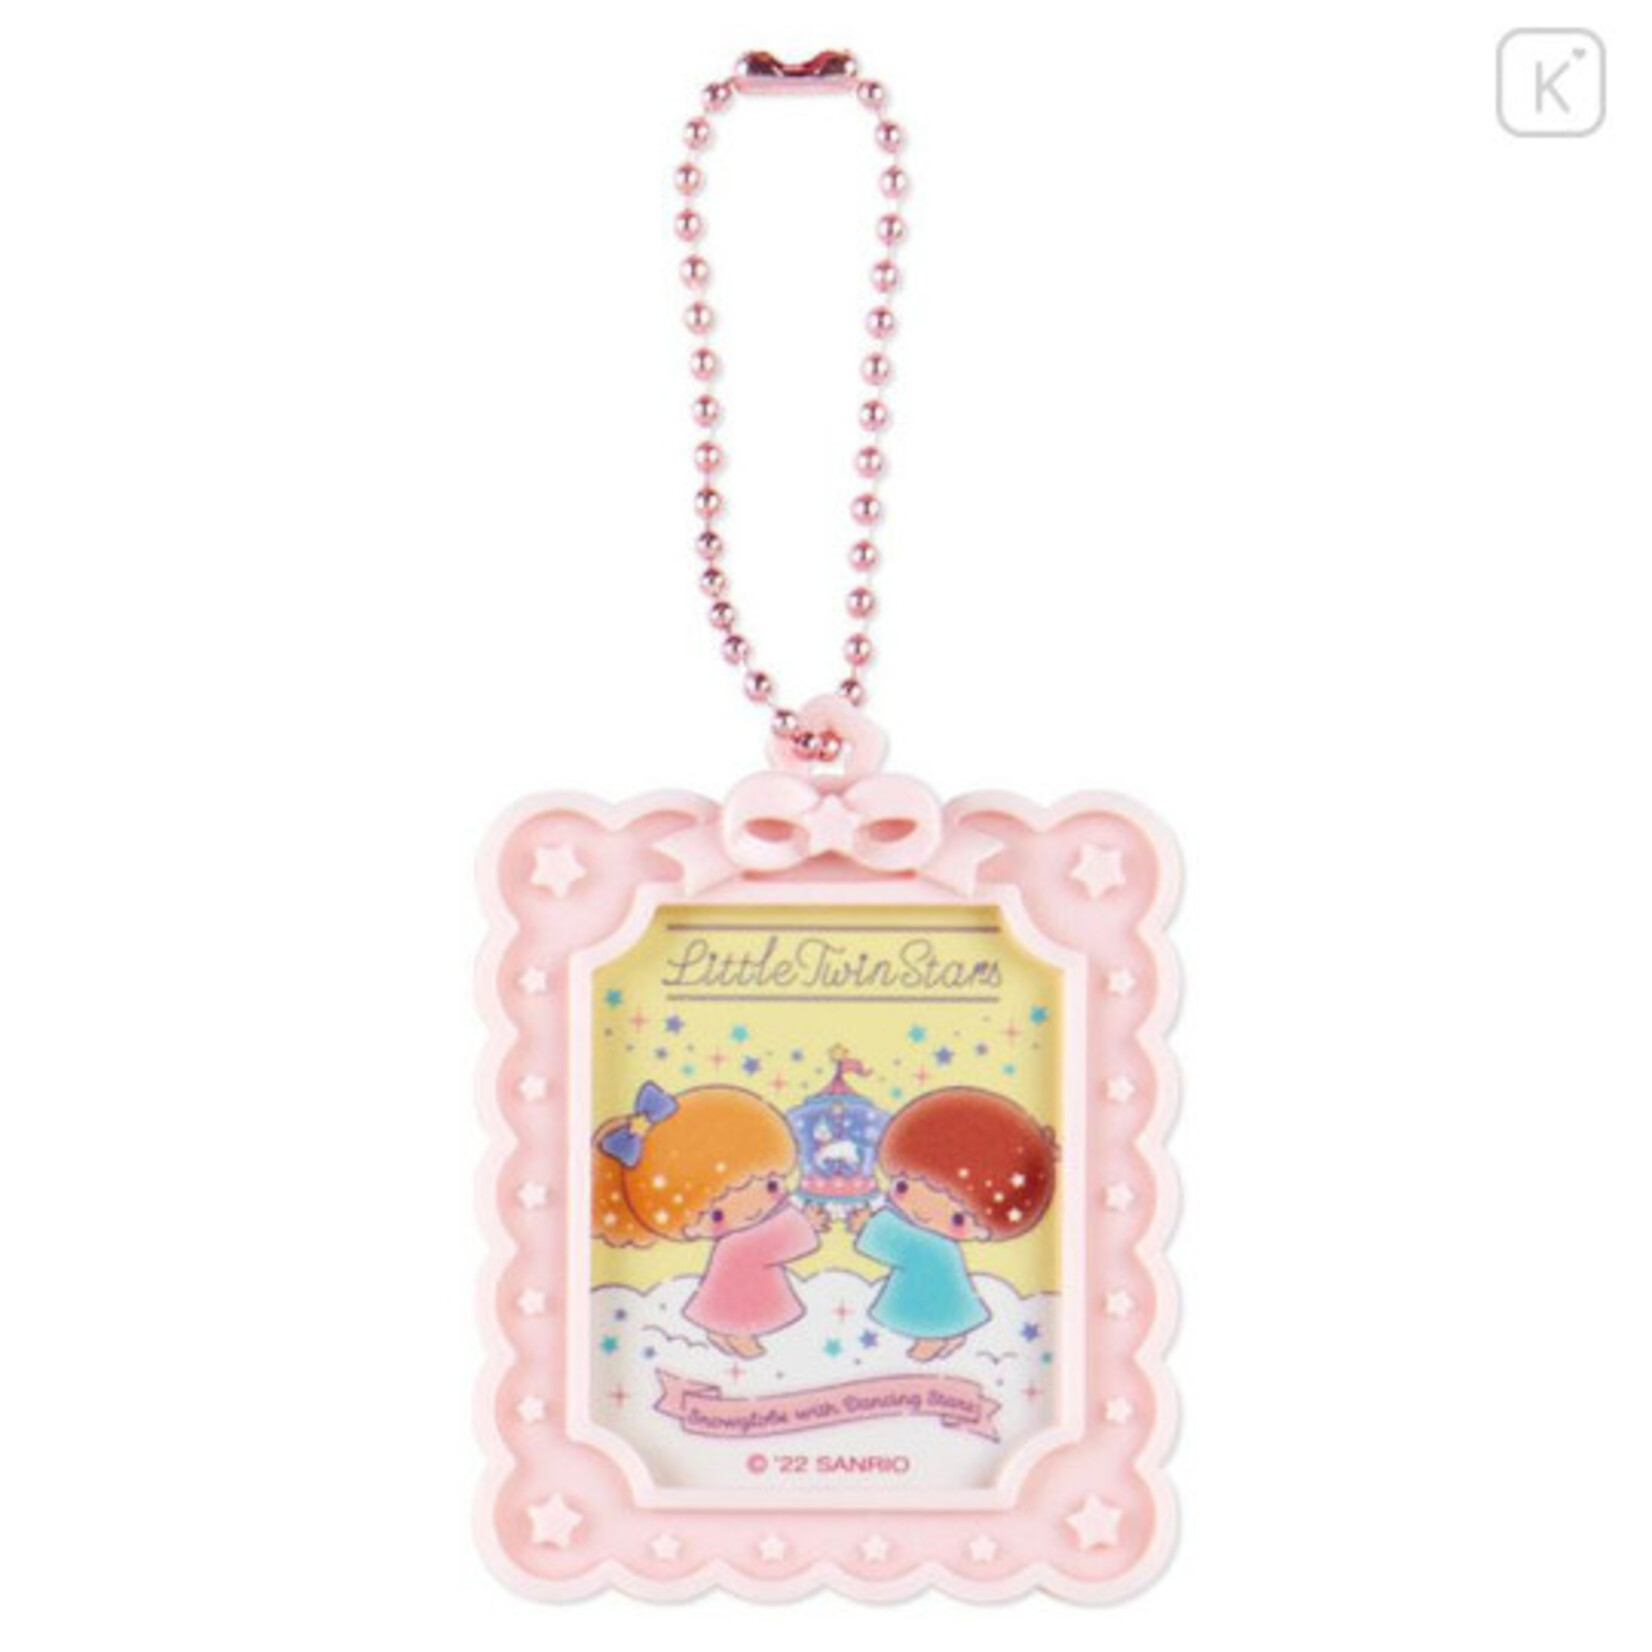 Sanrio Twin Stars Secret Mini Picture Book Photo Frame Keychain